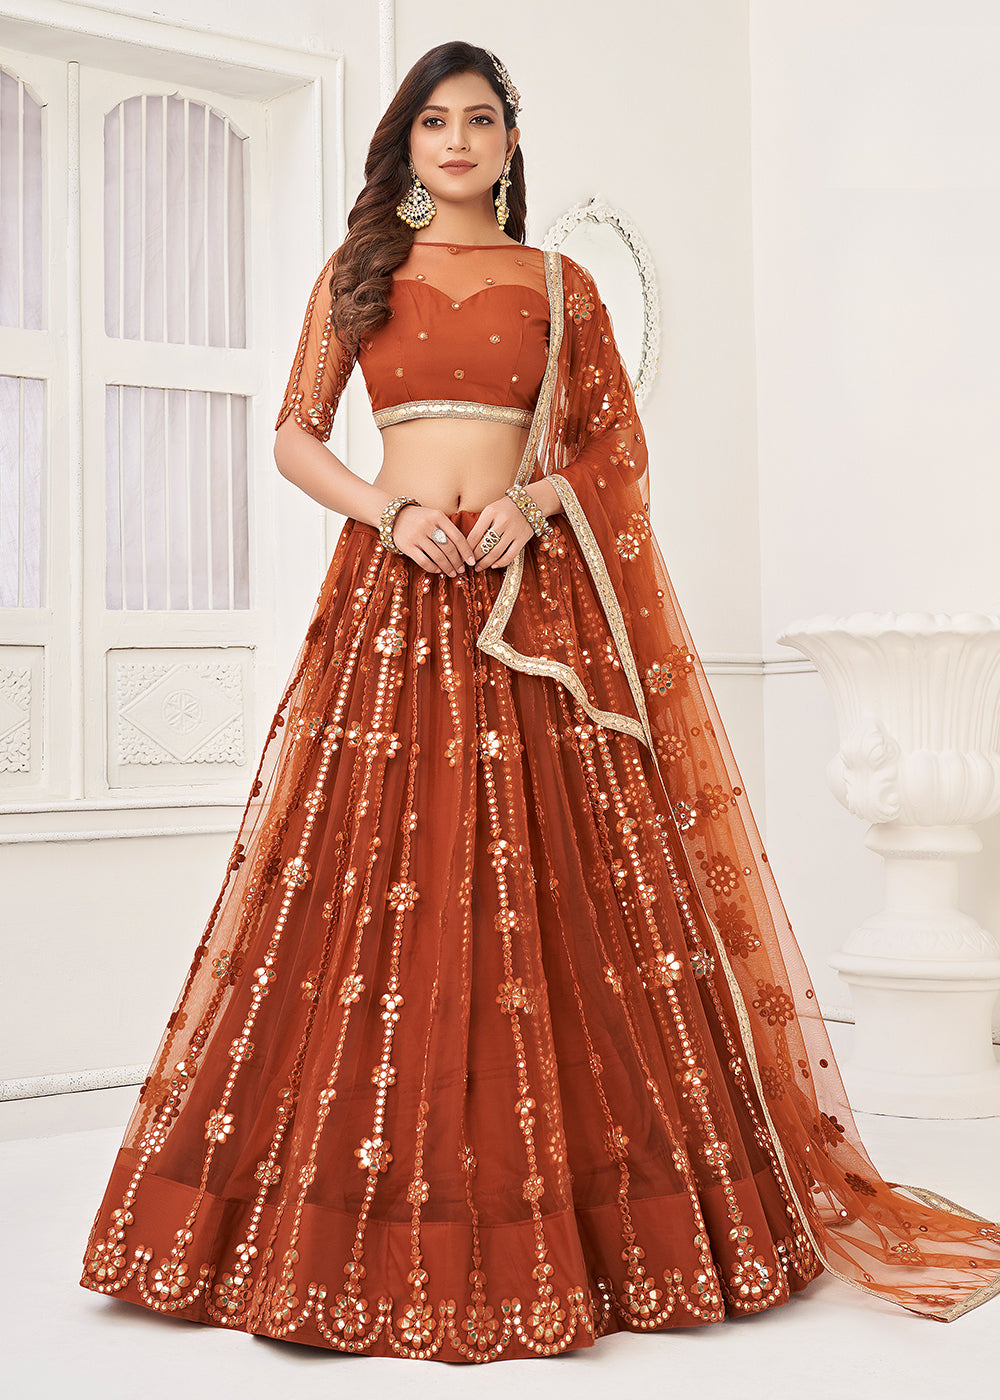 Buy Now Embroidered Net Rust Sangeet & Haldi Wedding Lehenga Choli Online in USA, UK, Canada & Worldwide at Empress Clothing.